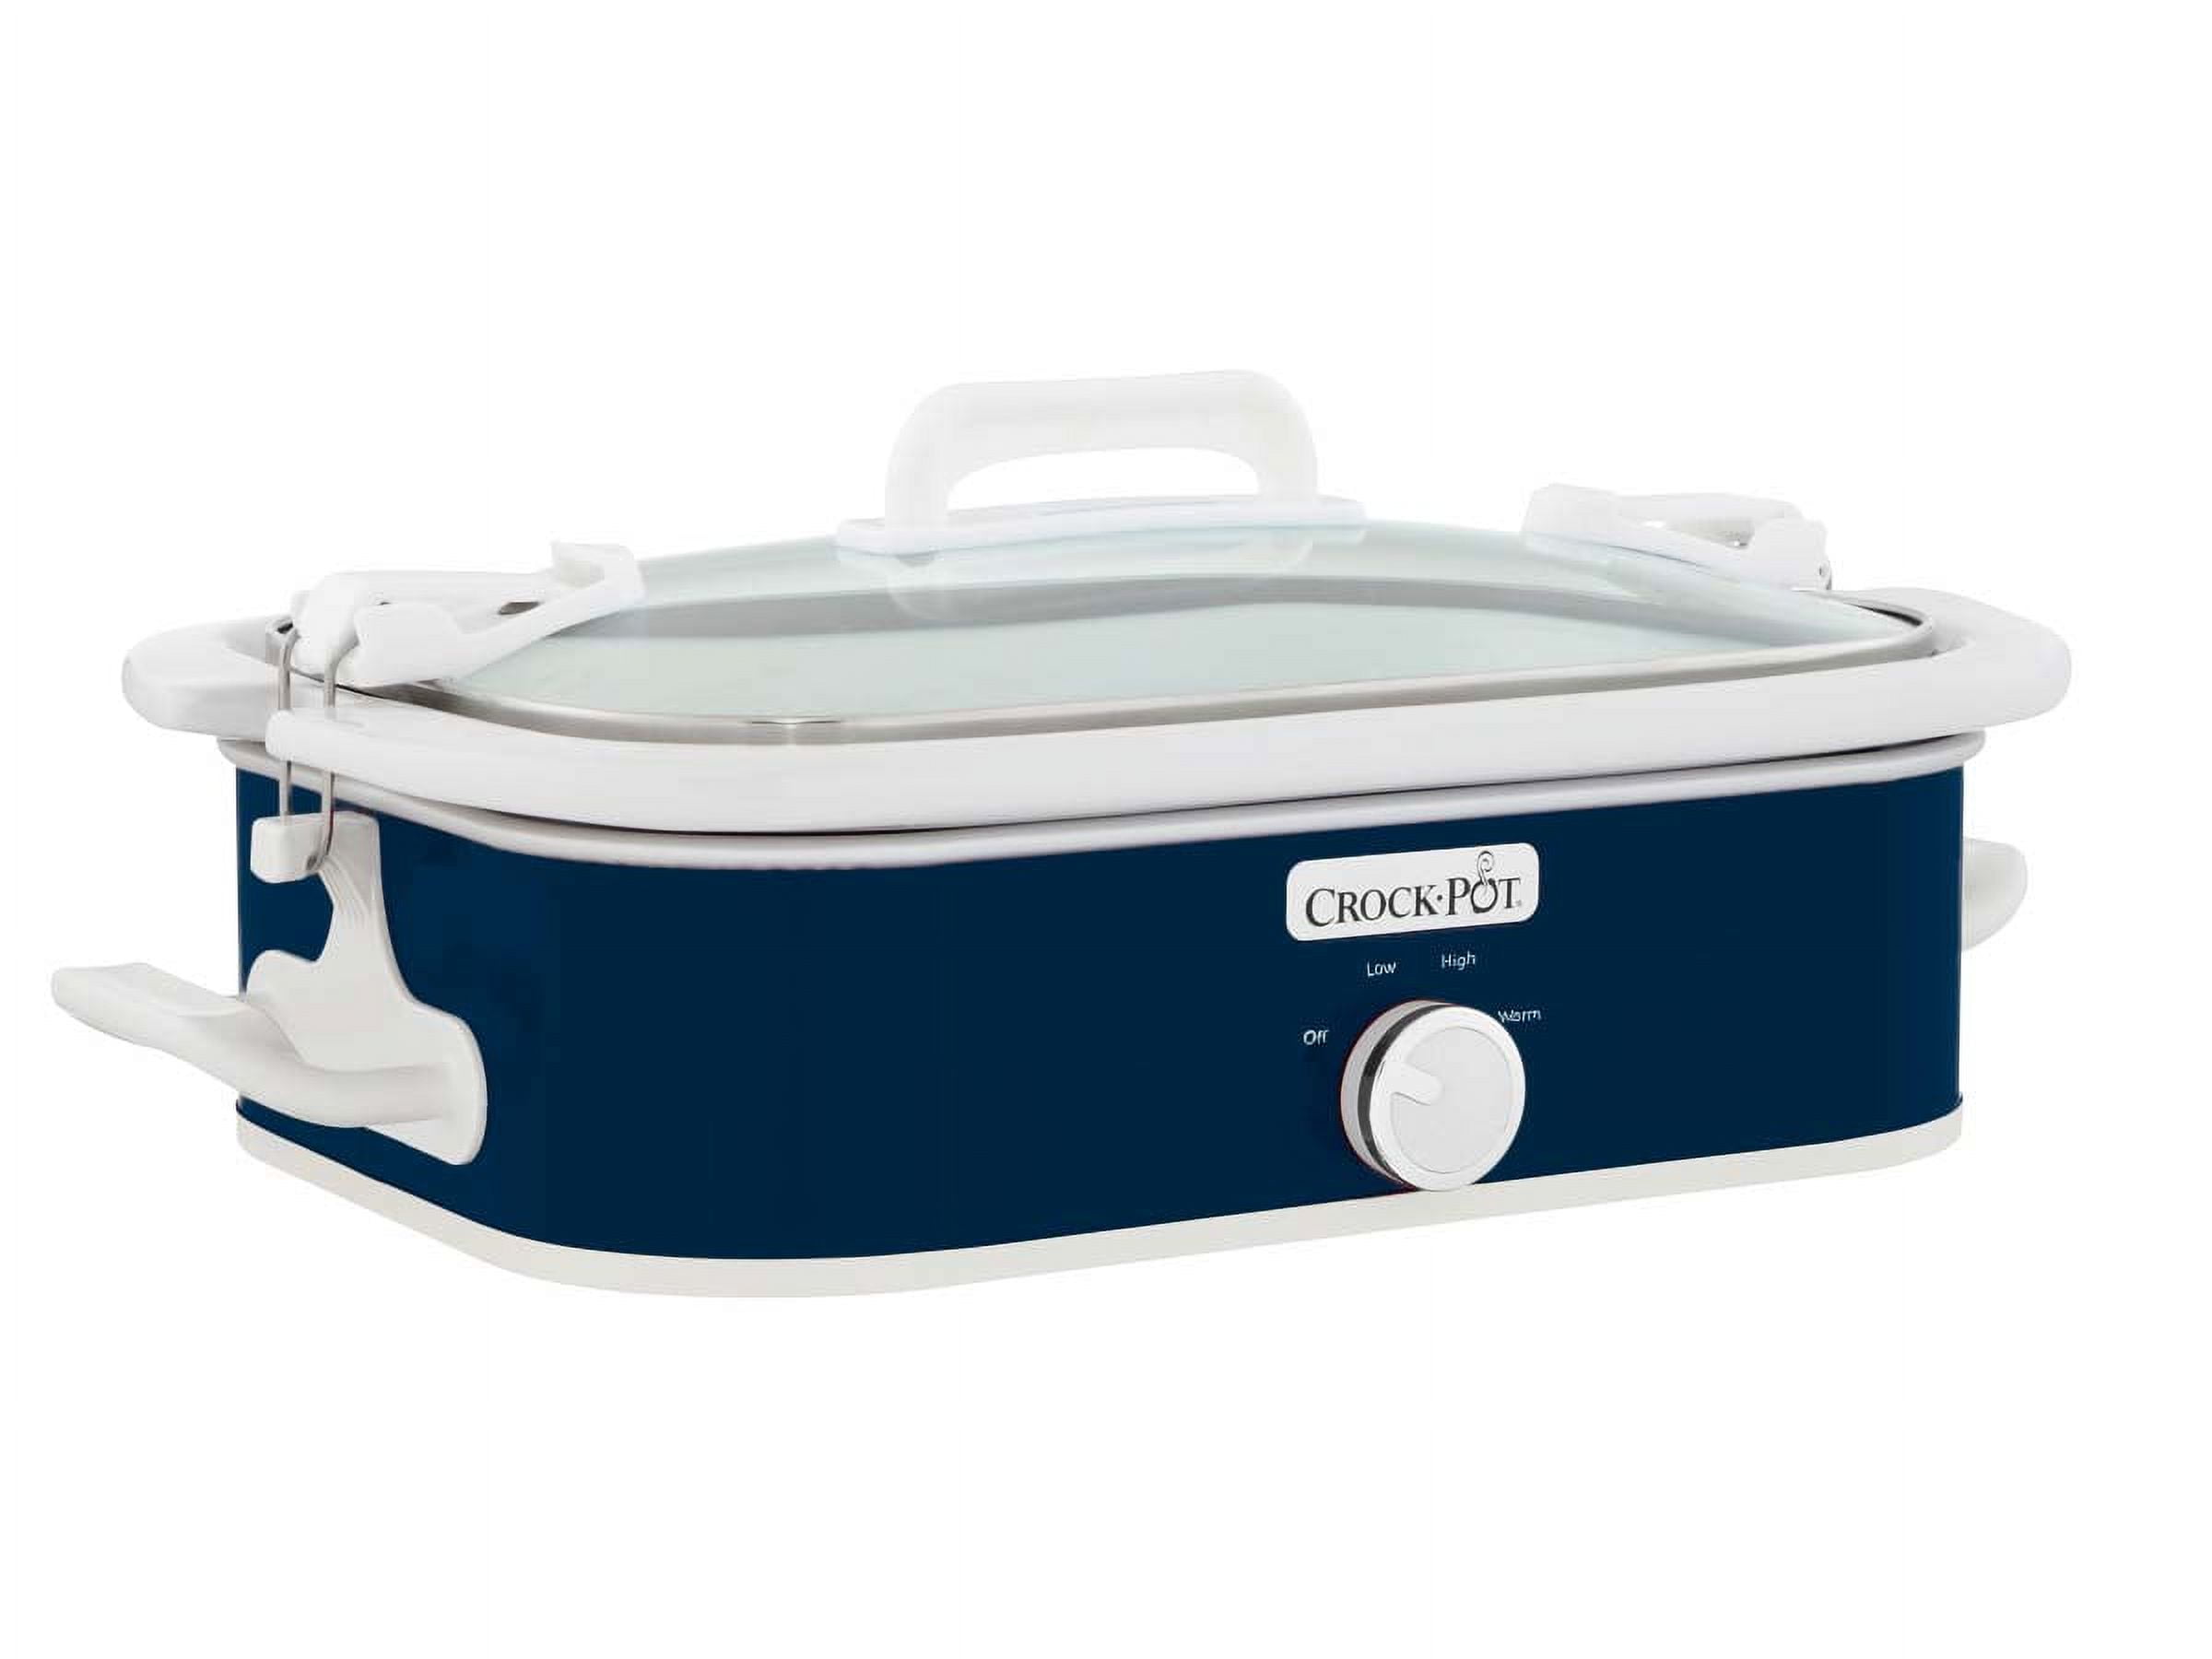 Crock-Pot 5-quart Manual Slow Cooker with Little Dipper - Bed Bath & Beyond  - 4126173